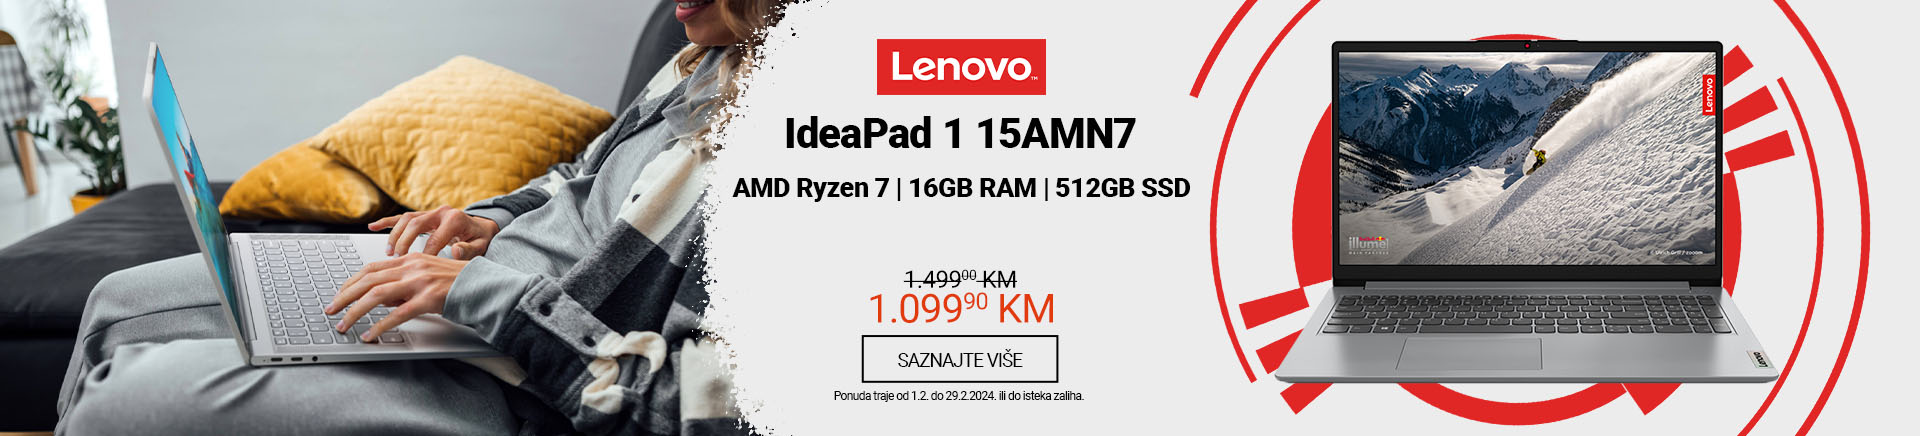 BA~Lenovo IdeaPad 1 15AMN7 NC MOBILE 380 X 436.jpg